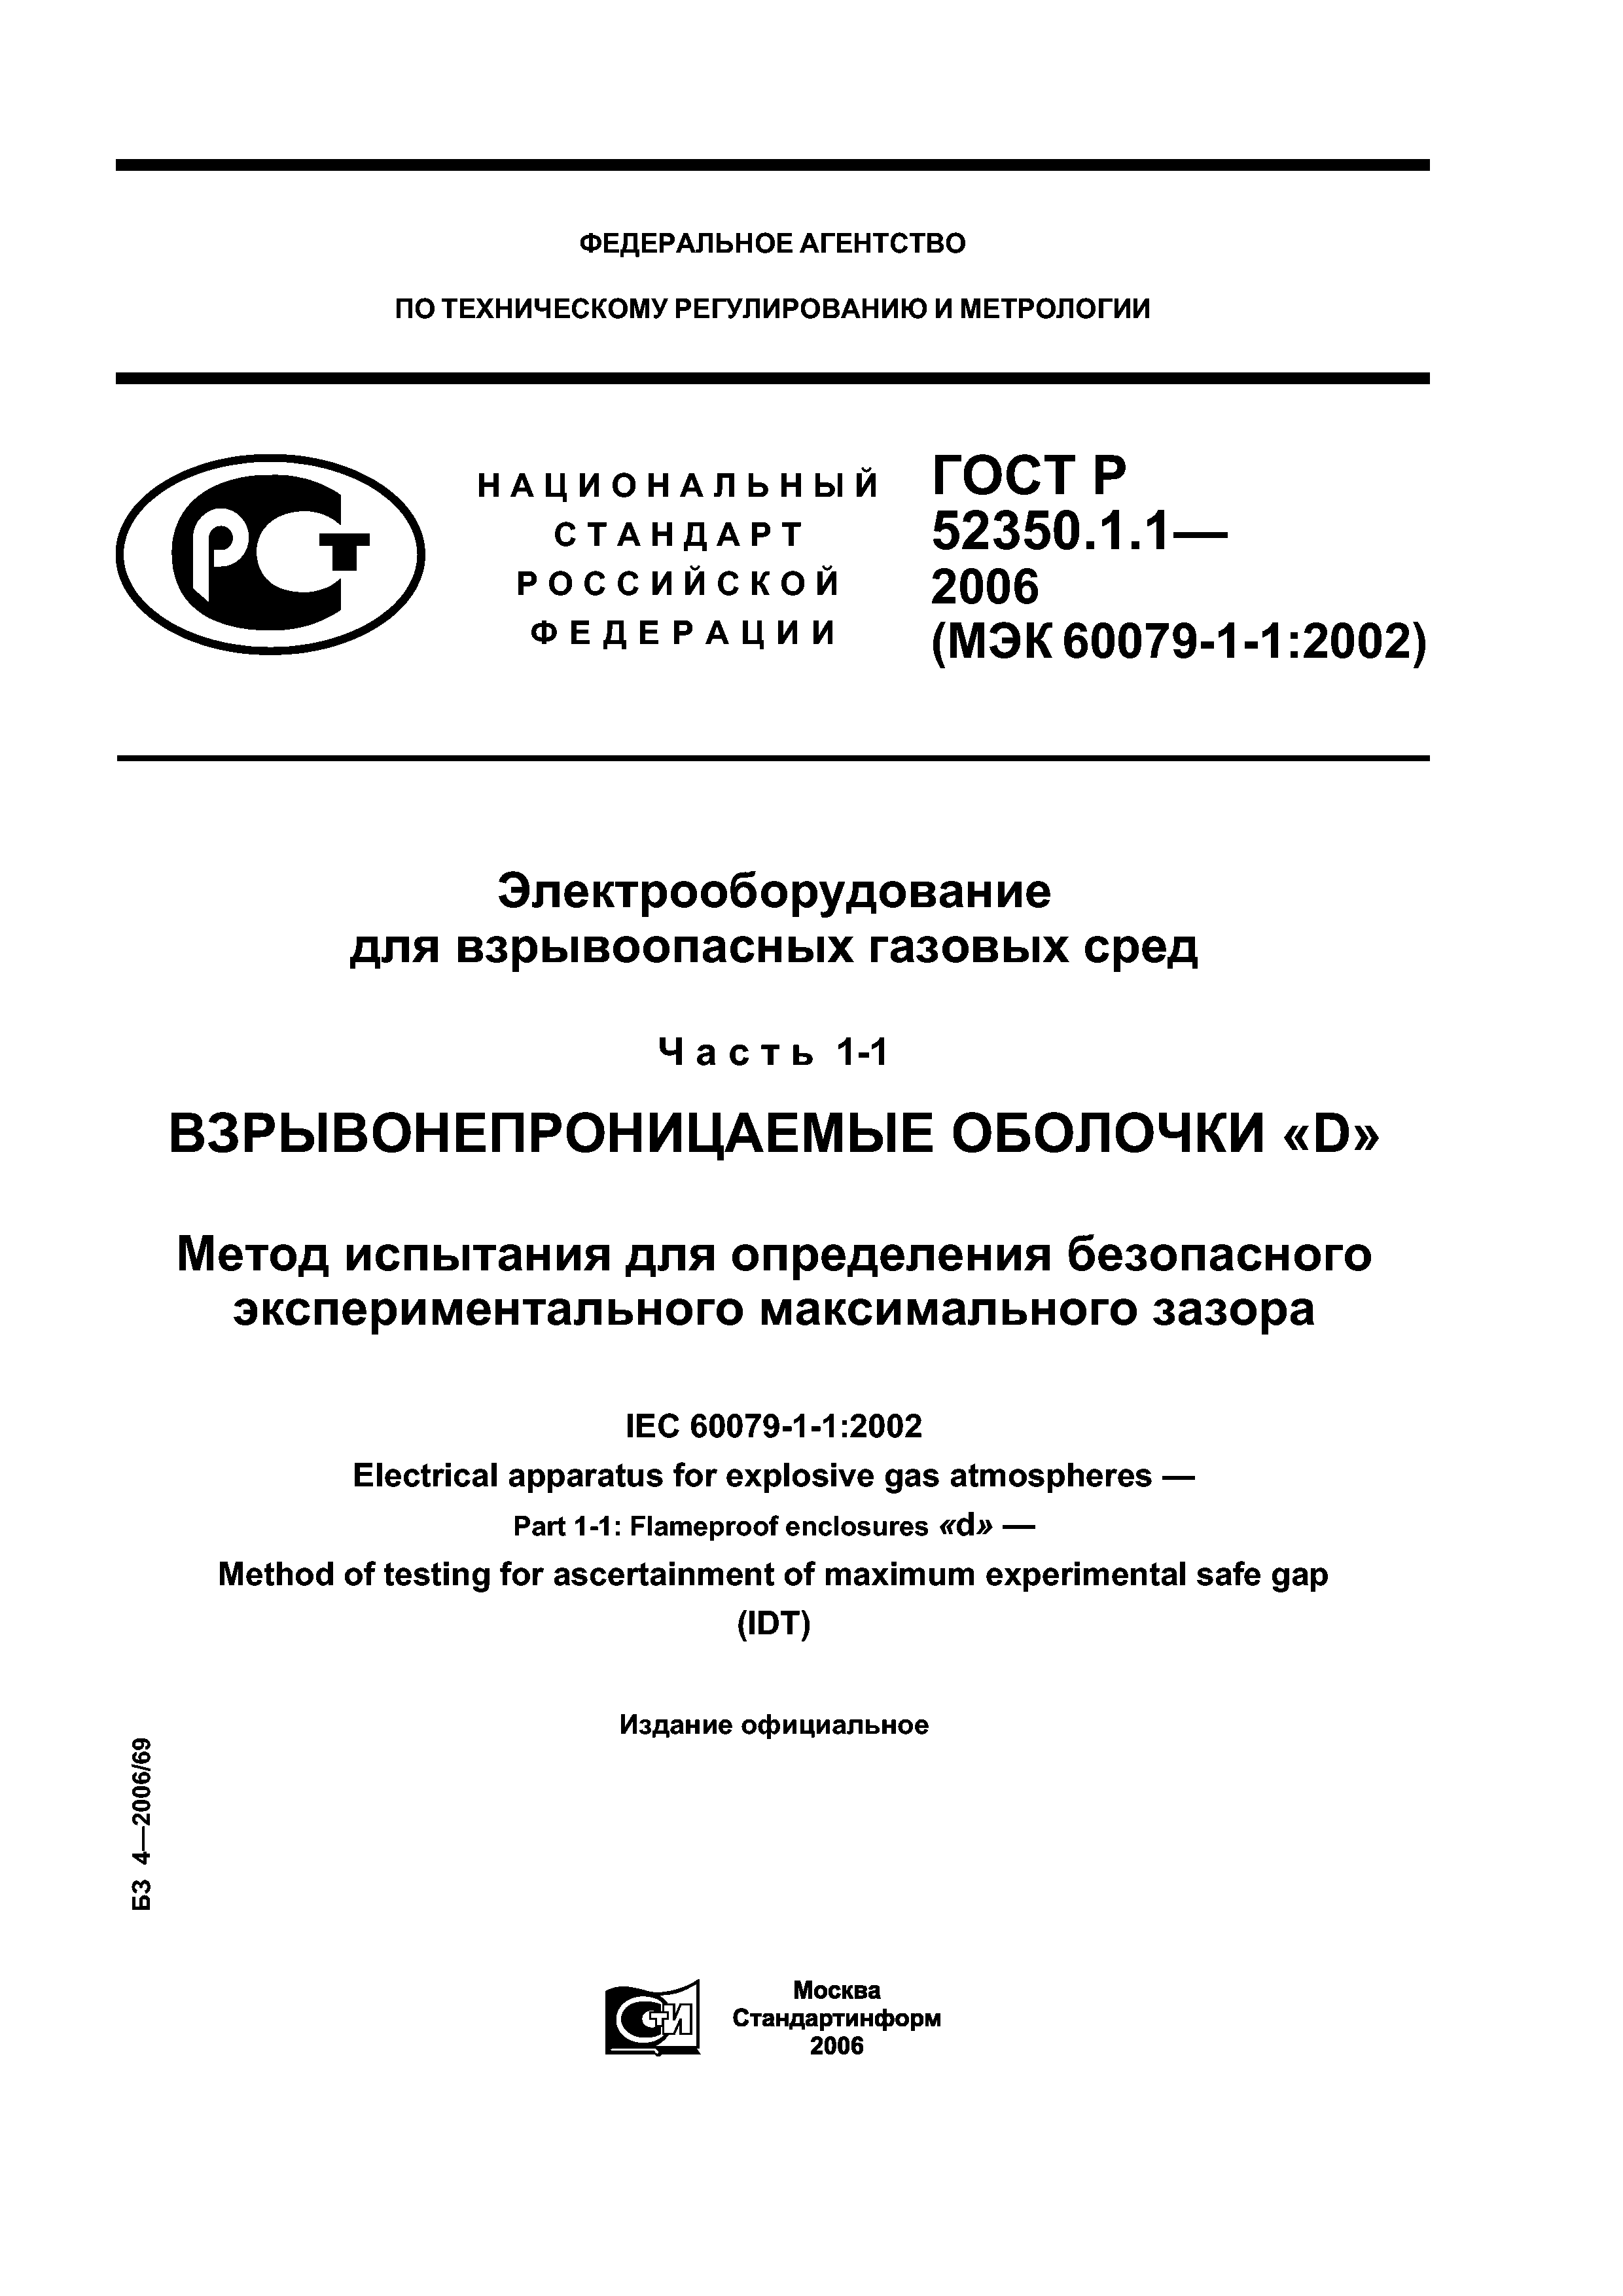 ГОСТ Р 52350.1.1-2006